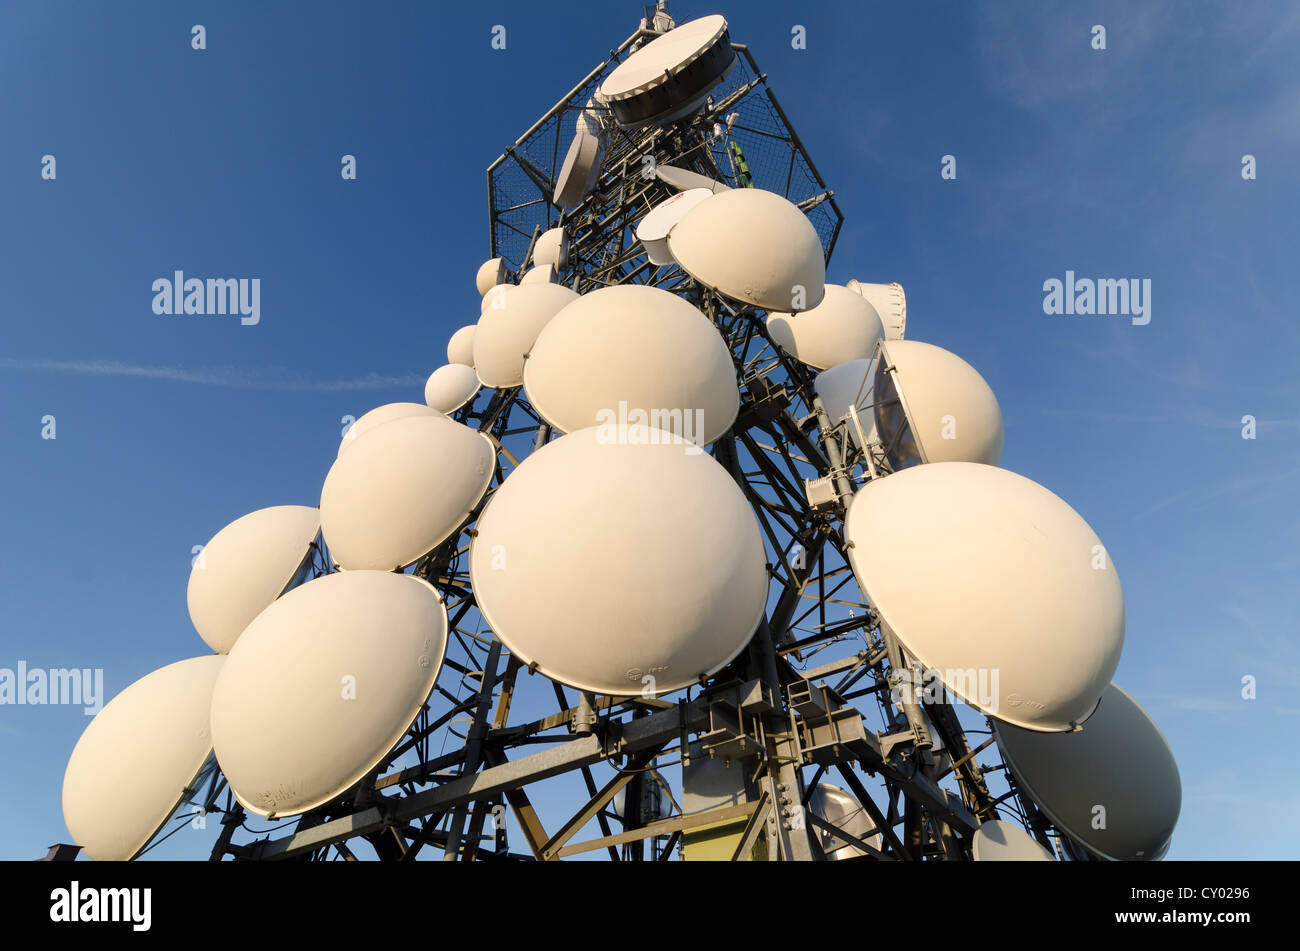 Transmitter mast on Col Visentin mountain, Italy, Europe Stock Photo